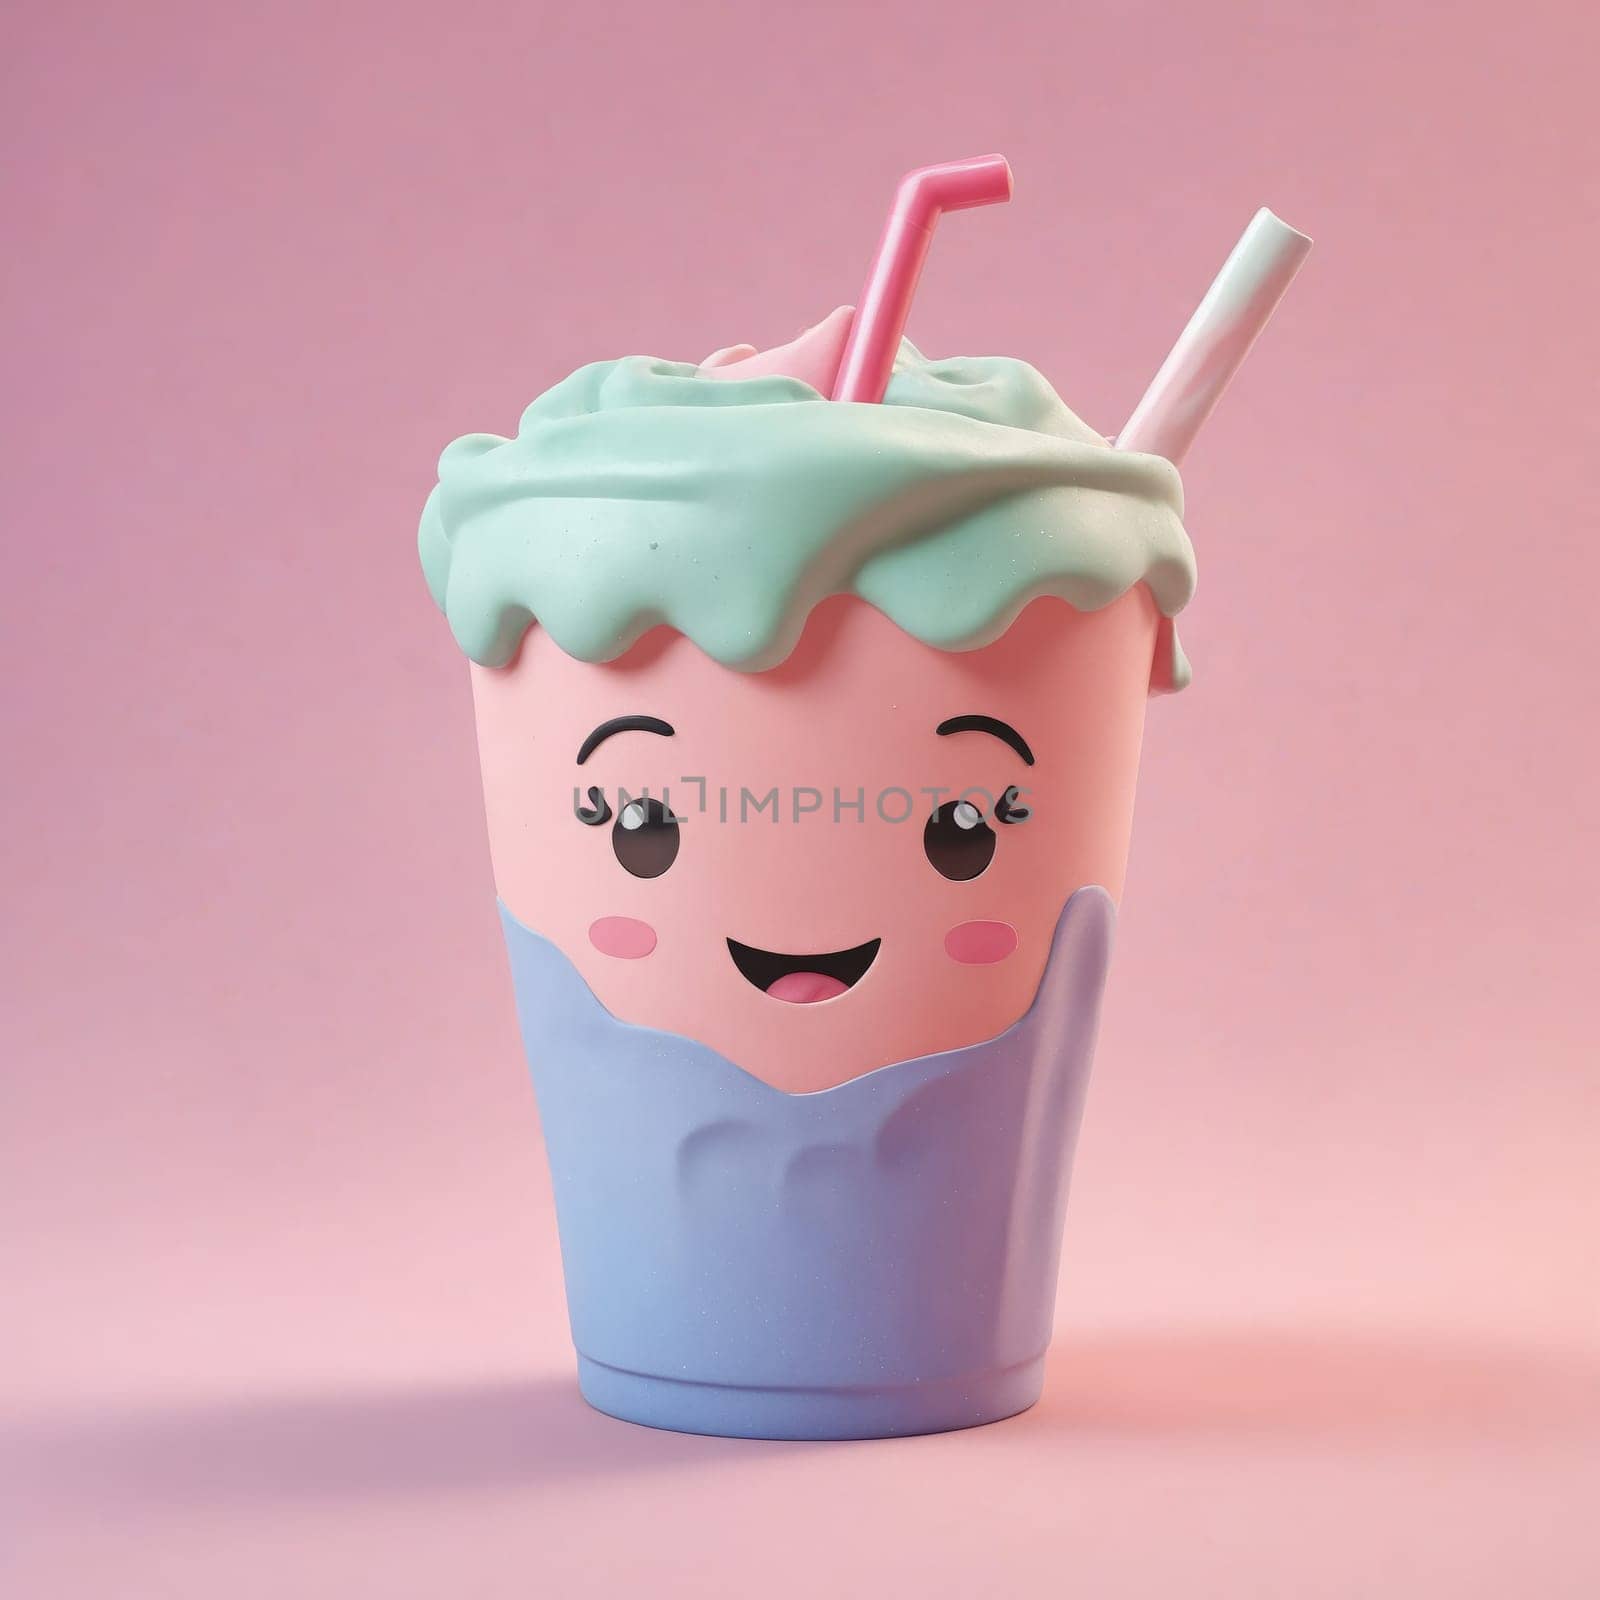 Delightful Digital Art of Happy Face Milkshake Glass by Andre1ns